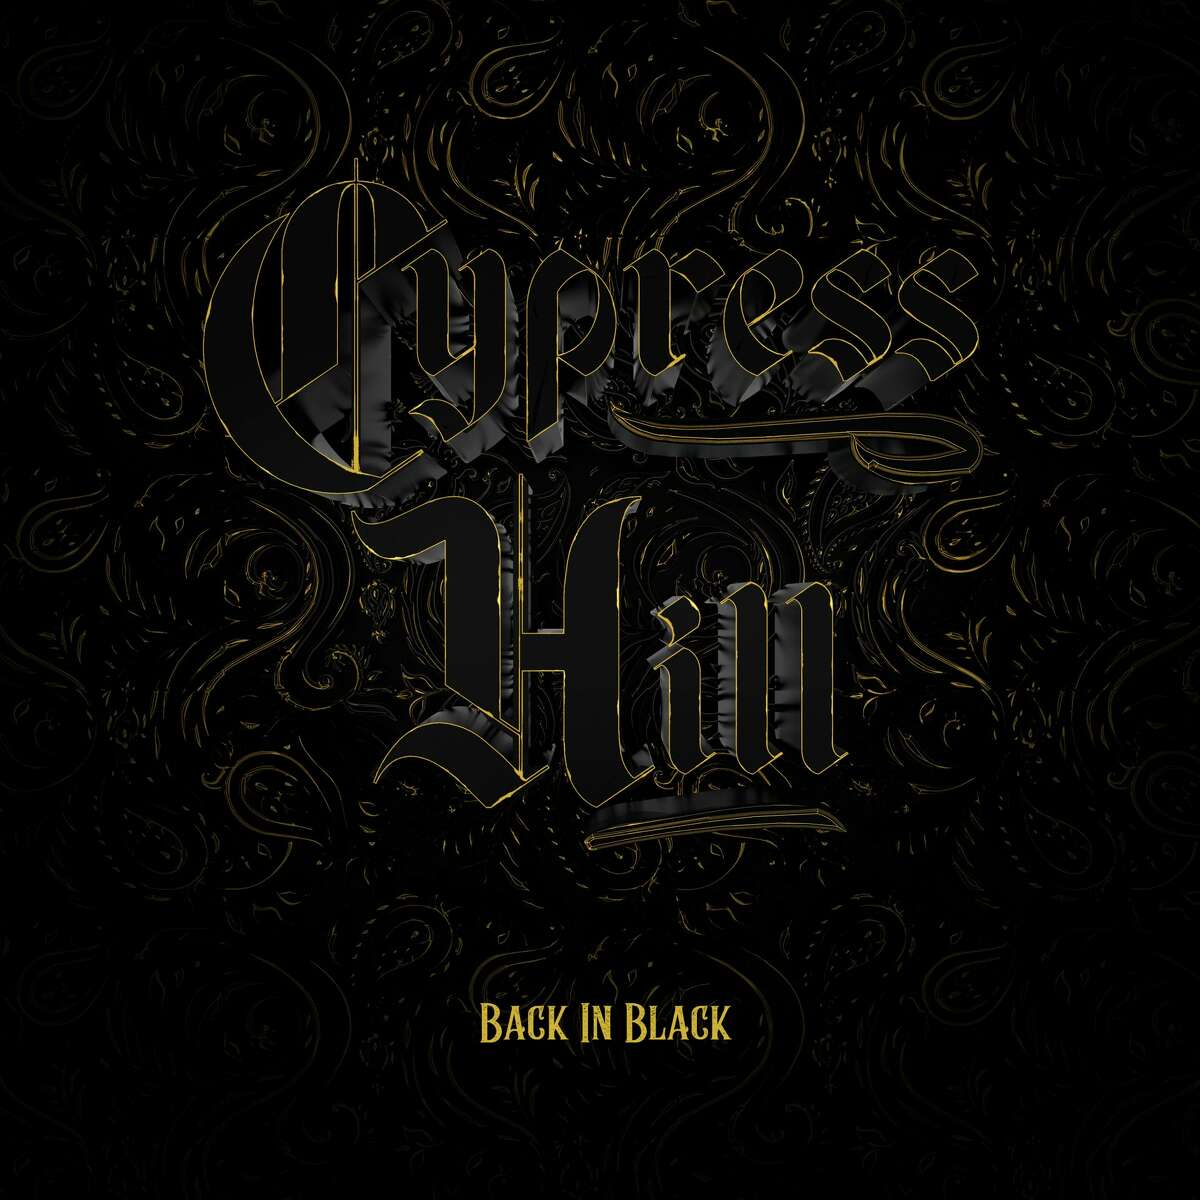 "Back in Black" Cypress Hill